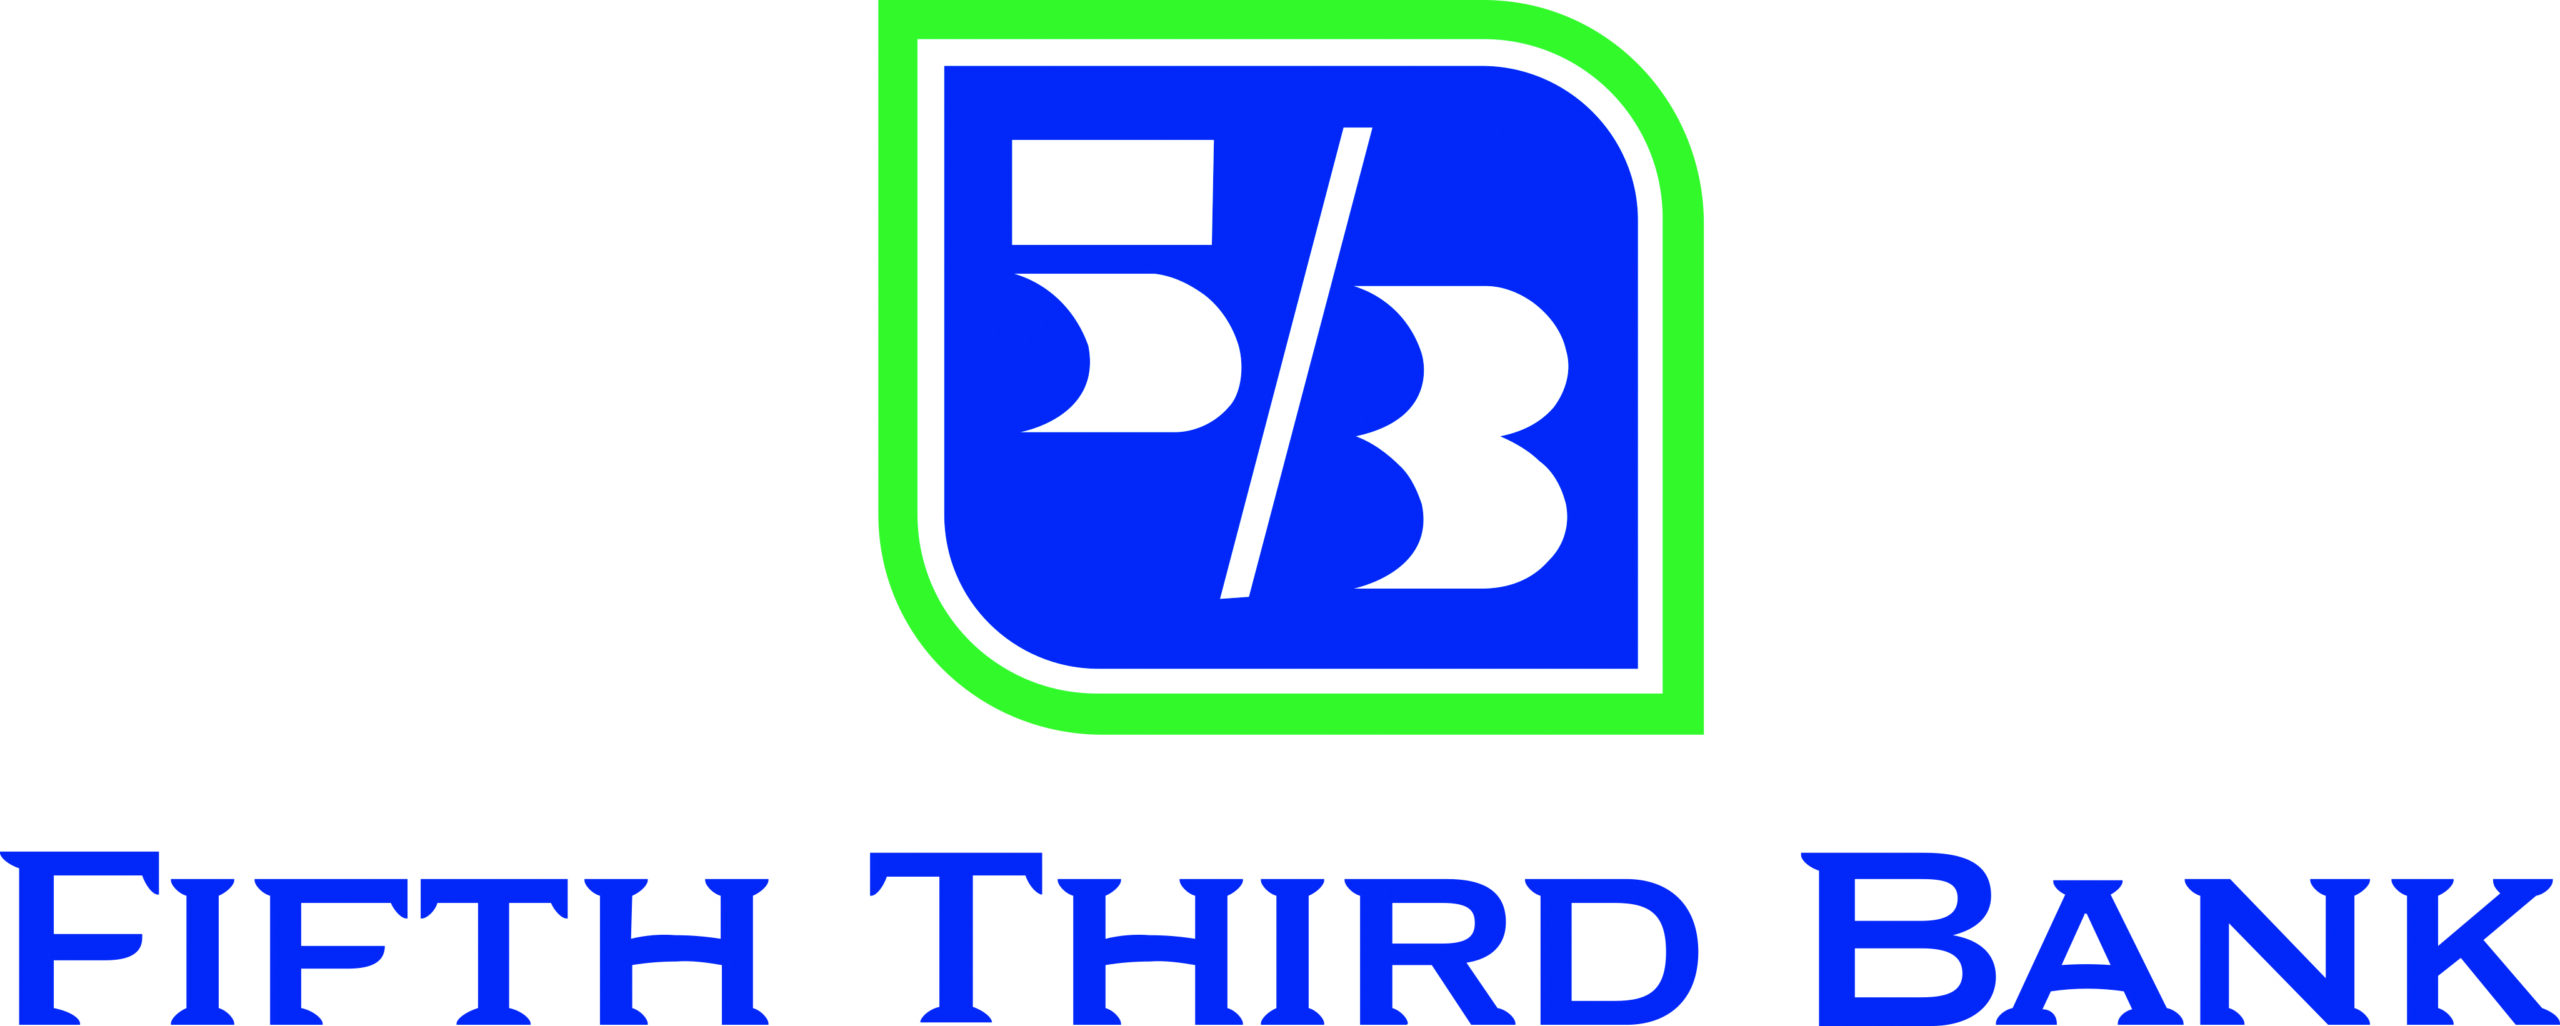 Fifth Third Bank Logo 1